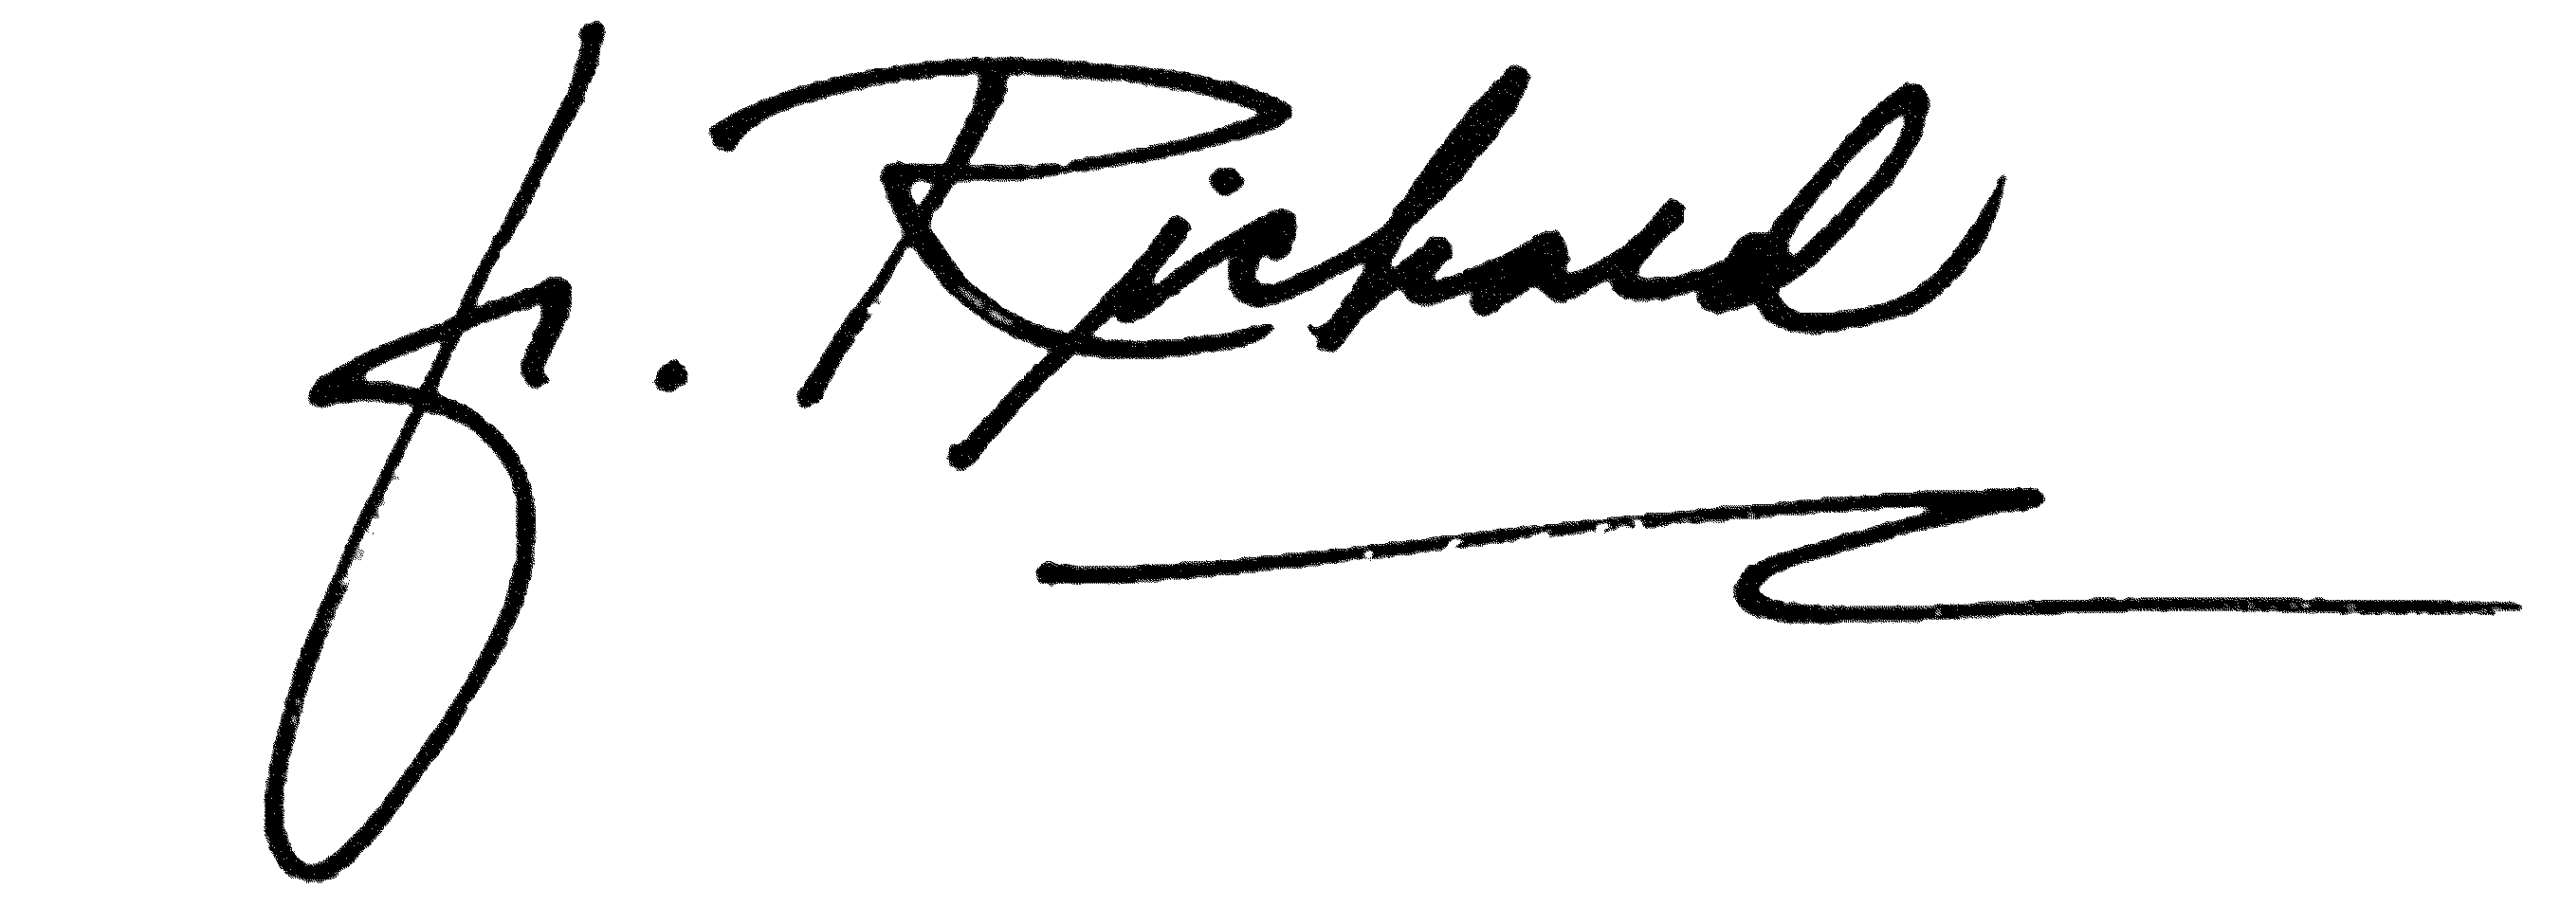 fr-richard-signature-2016-11-11